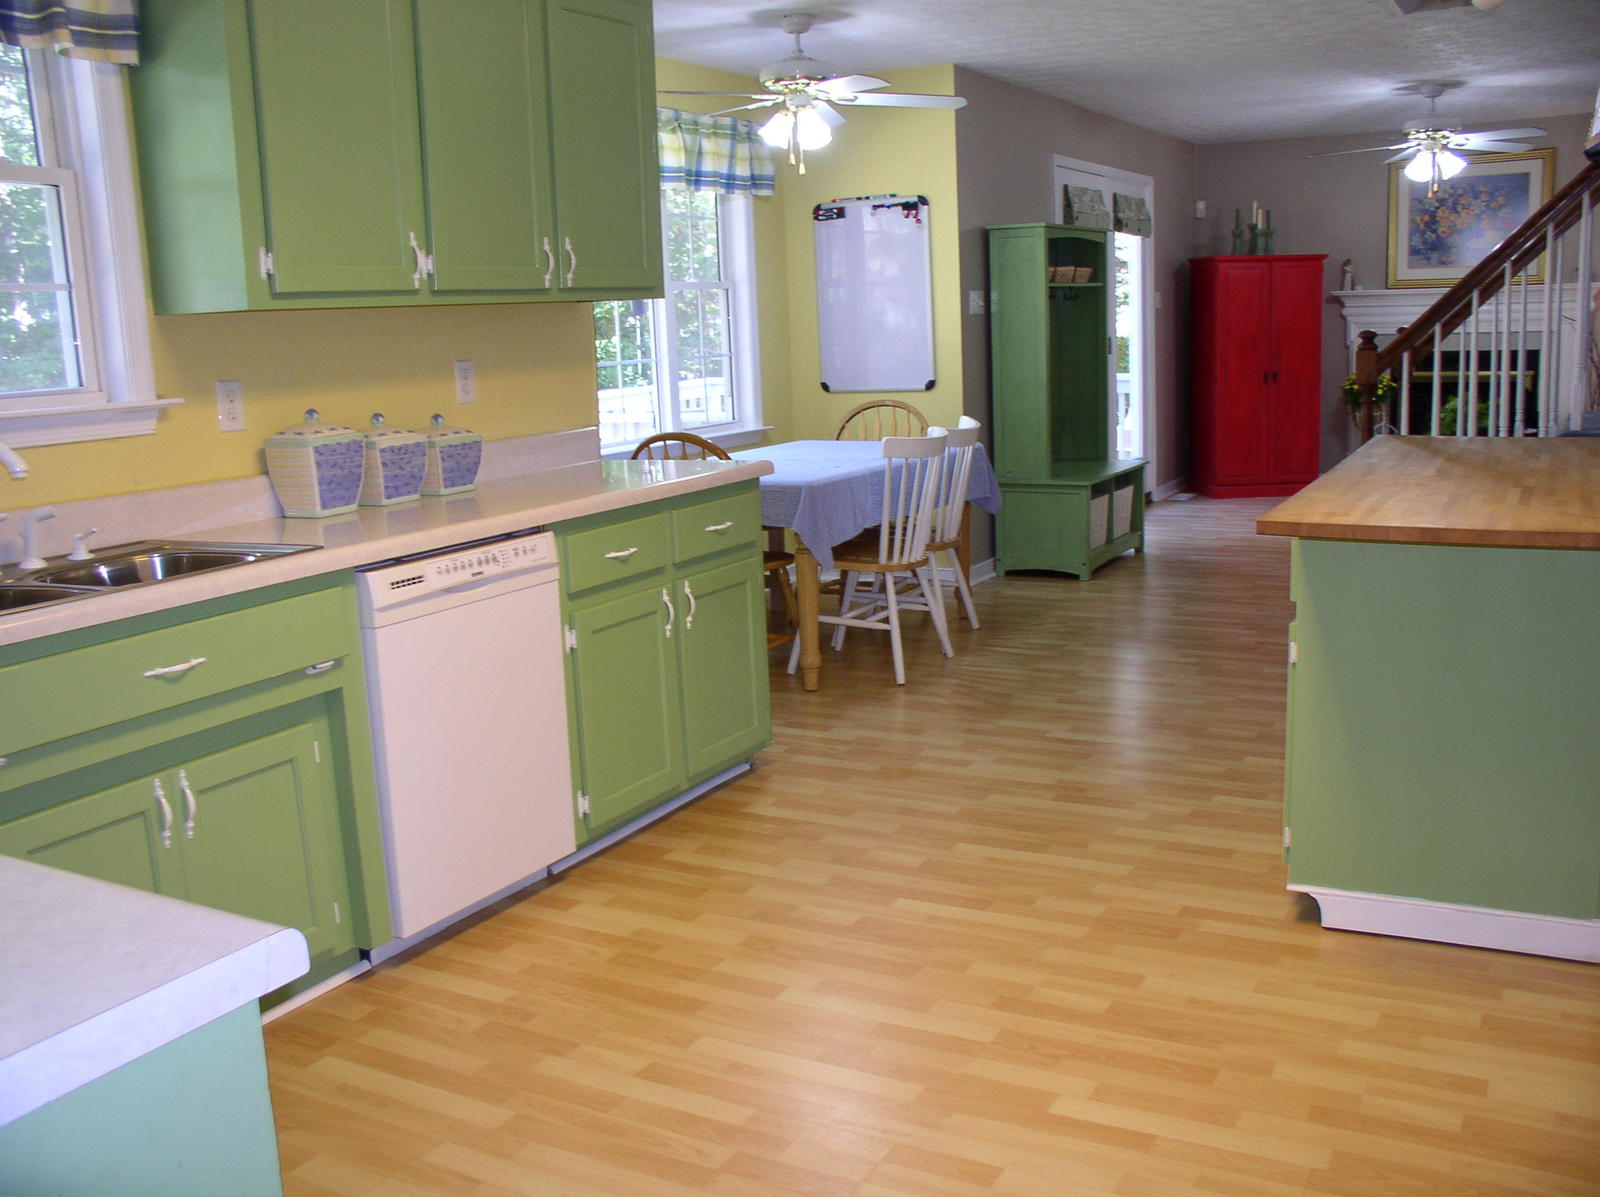 Kitchen Cabinets Color Ideas Kitchen Design Ideas